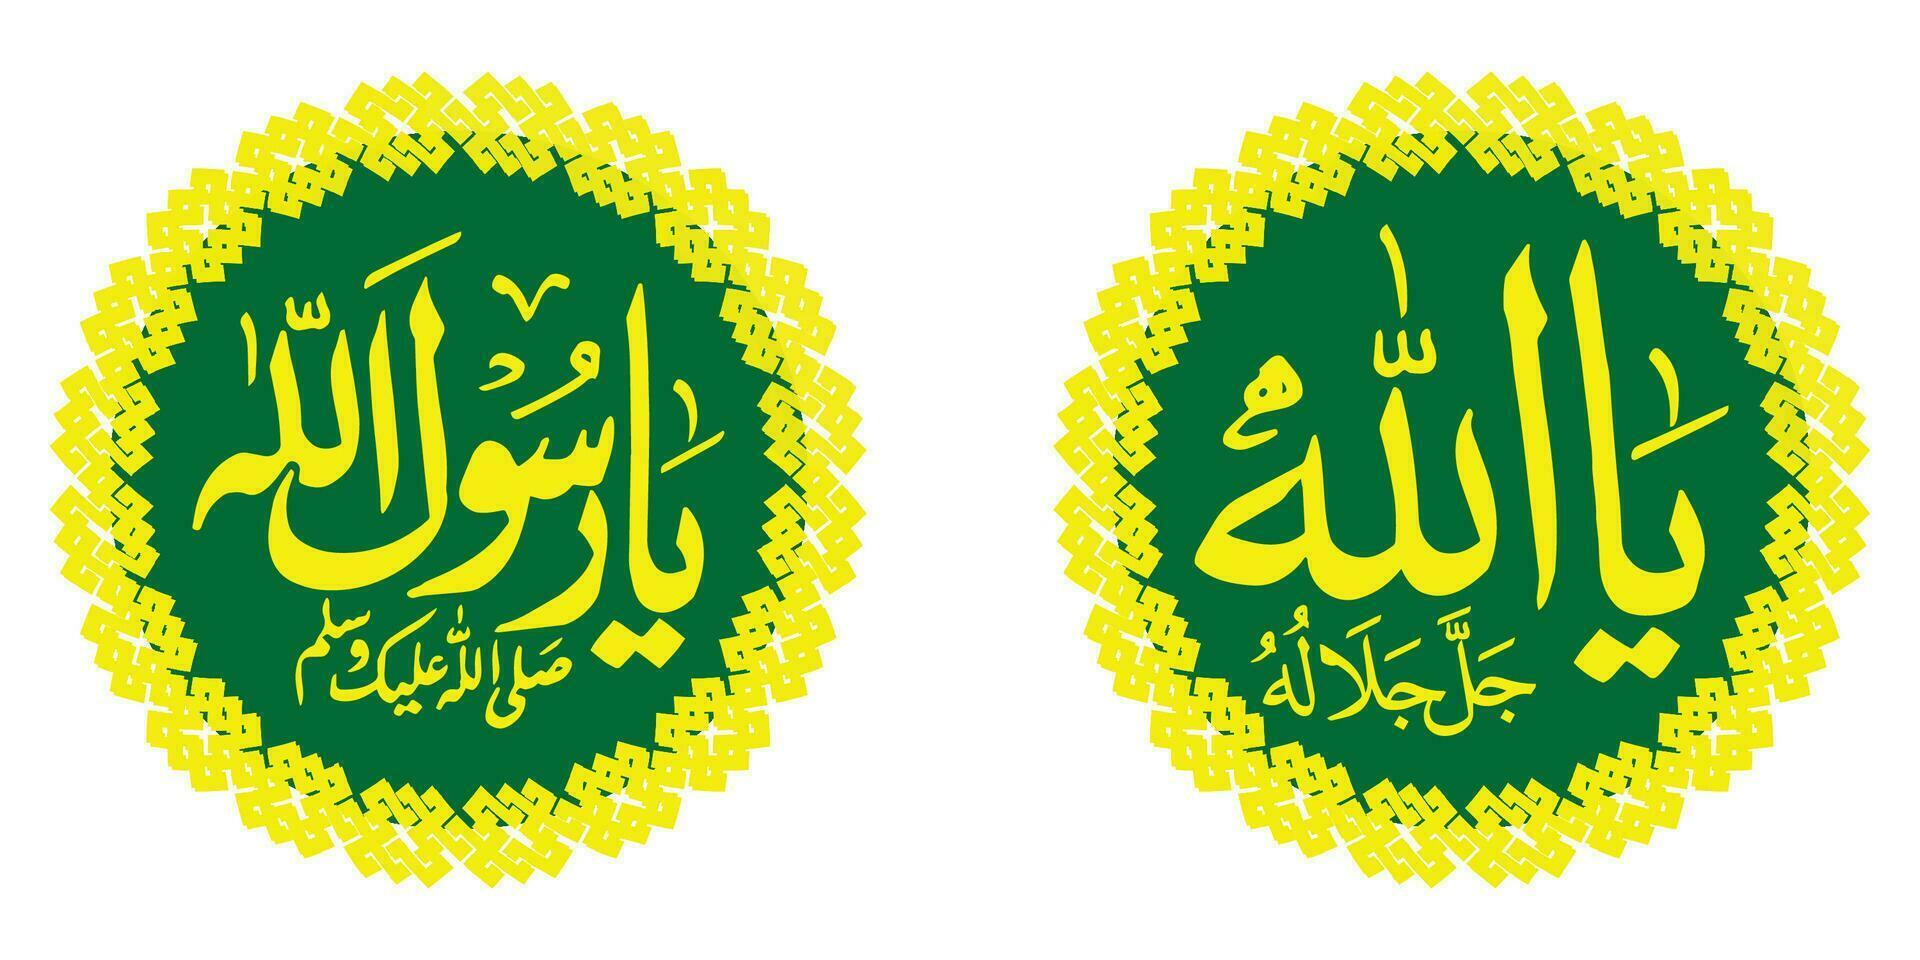 ya Allah e ya rasoolallah calligrafia islamico testo logo monocromatico vettore